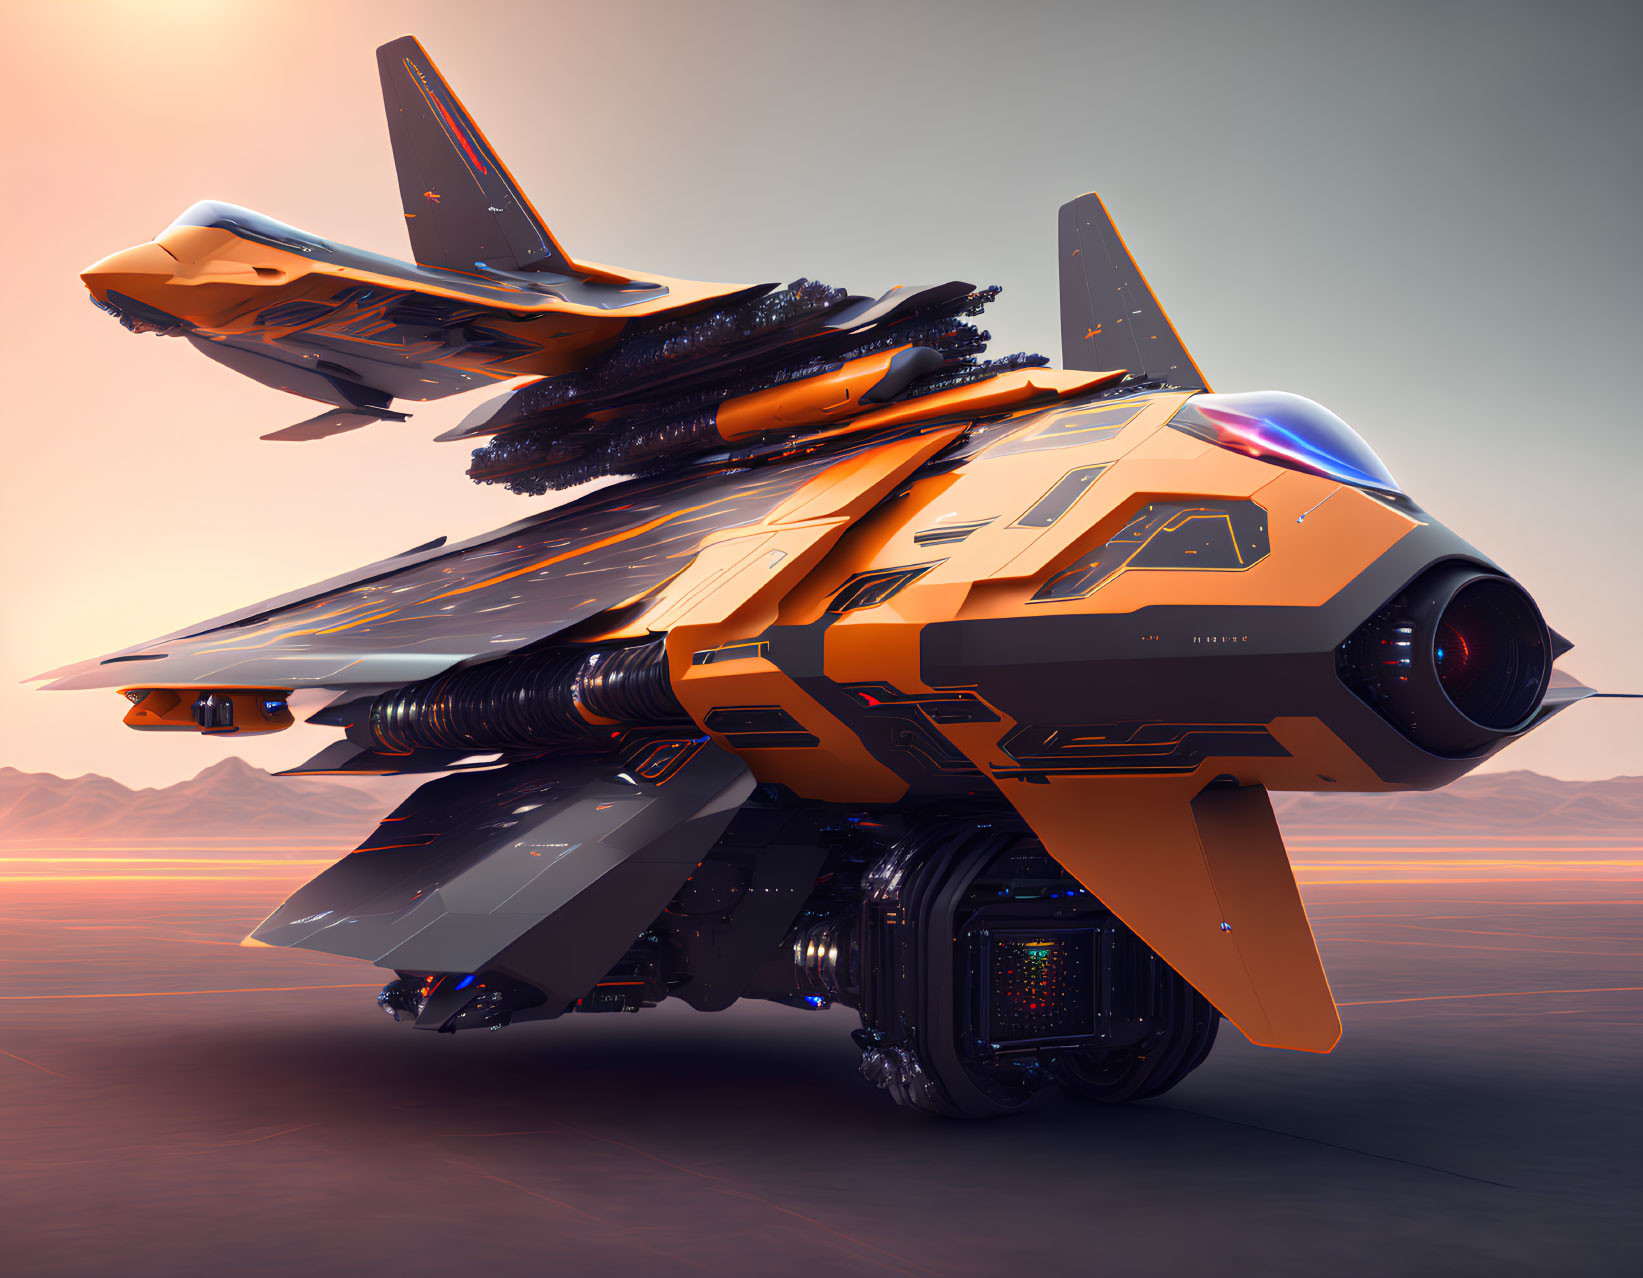 Sleek orange and gray spacecraft on desert terrain at dusk